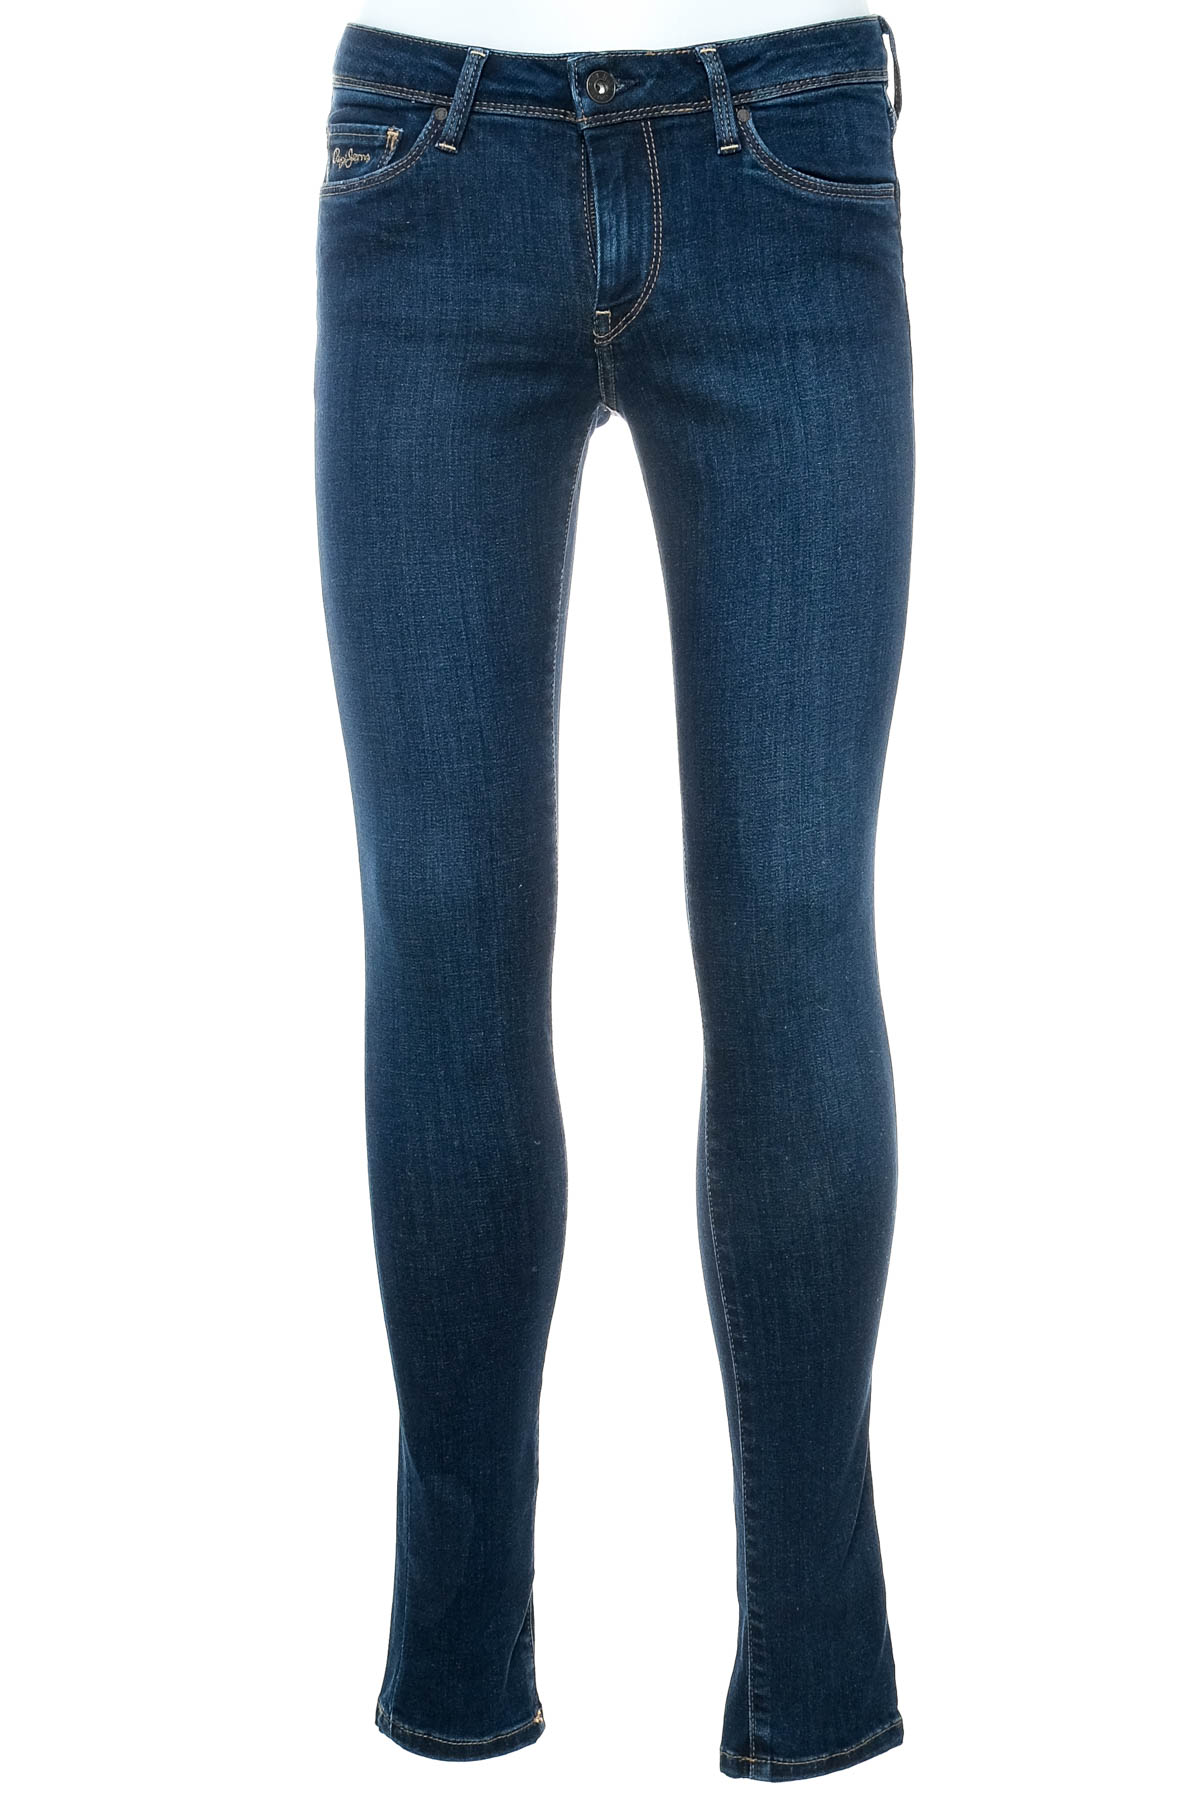 Women's jeans - Pepe Jeans - 0